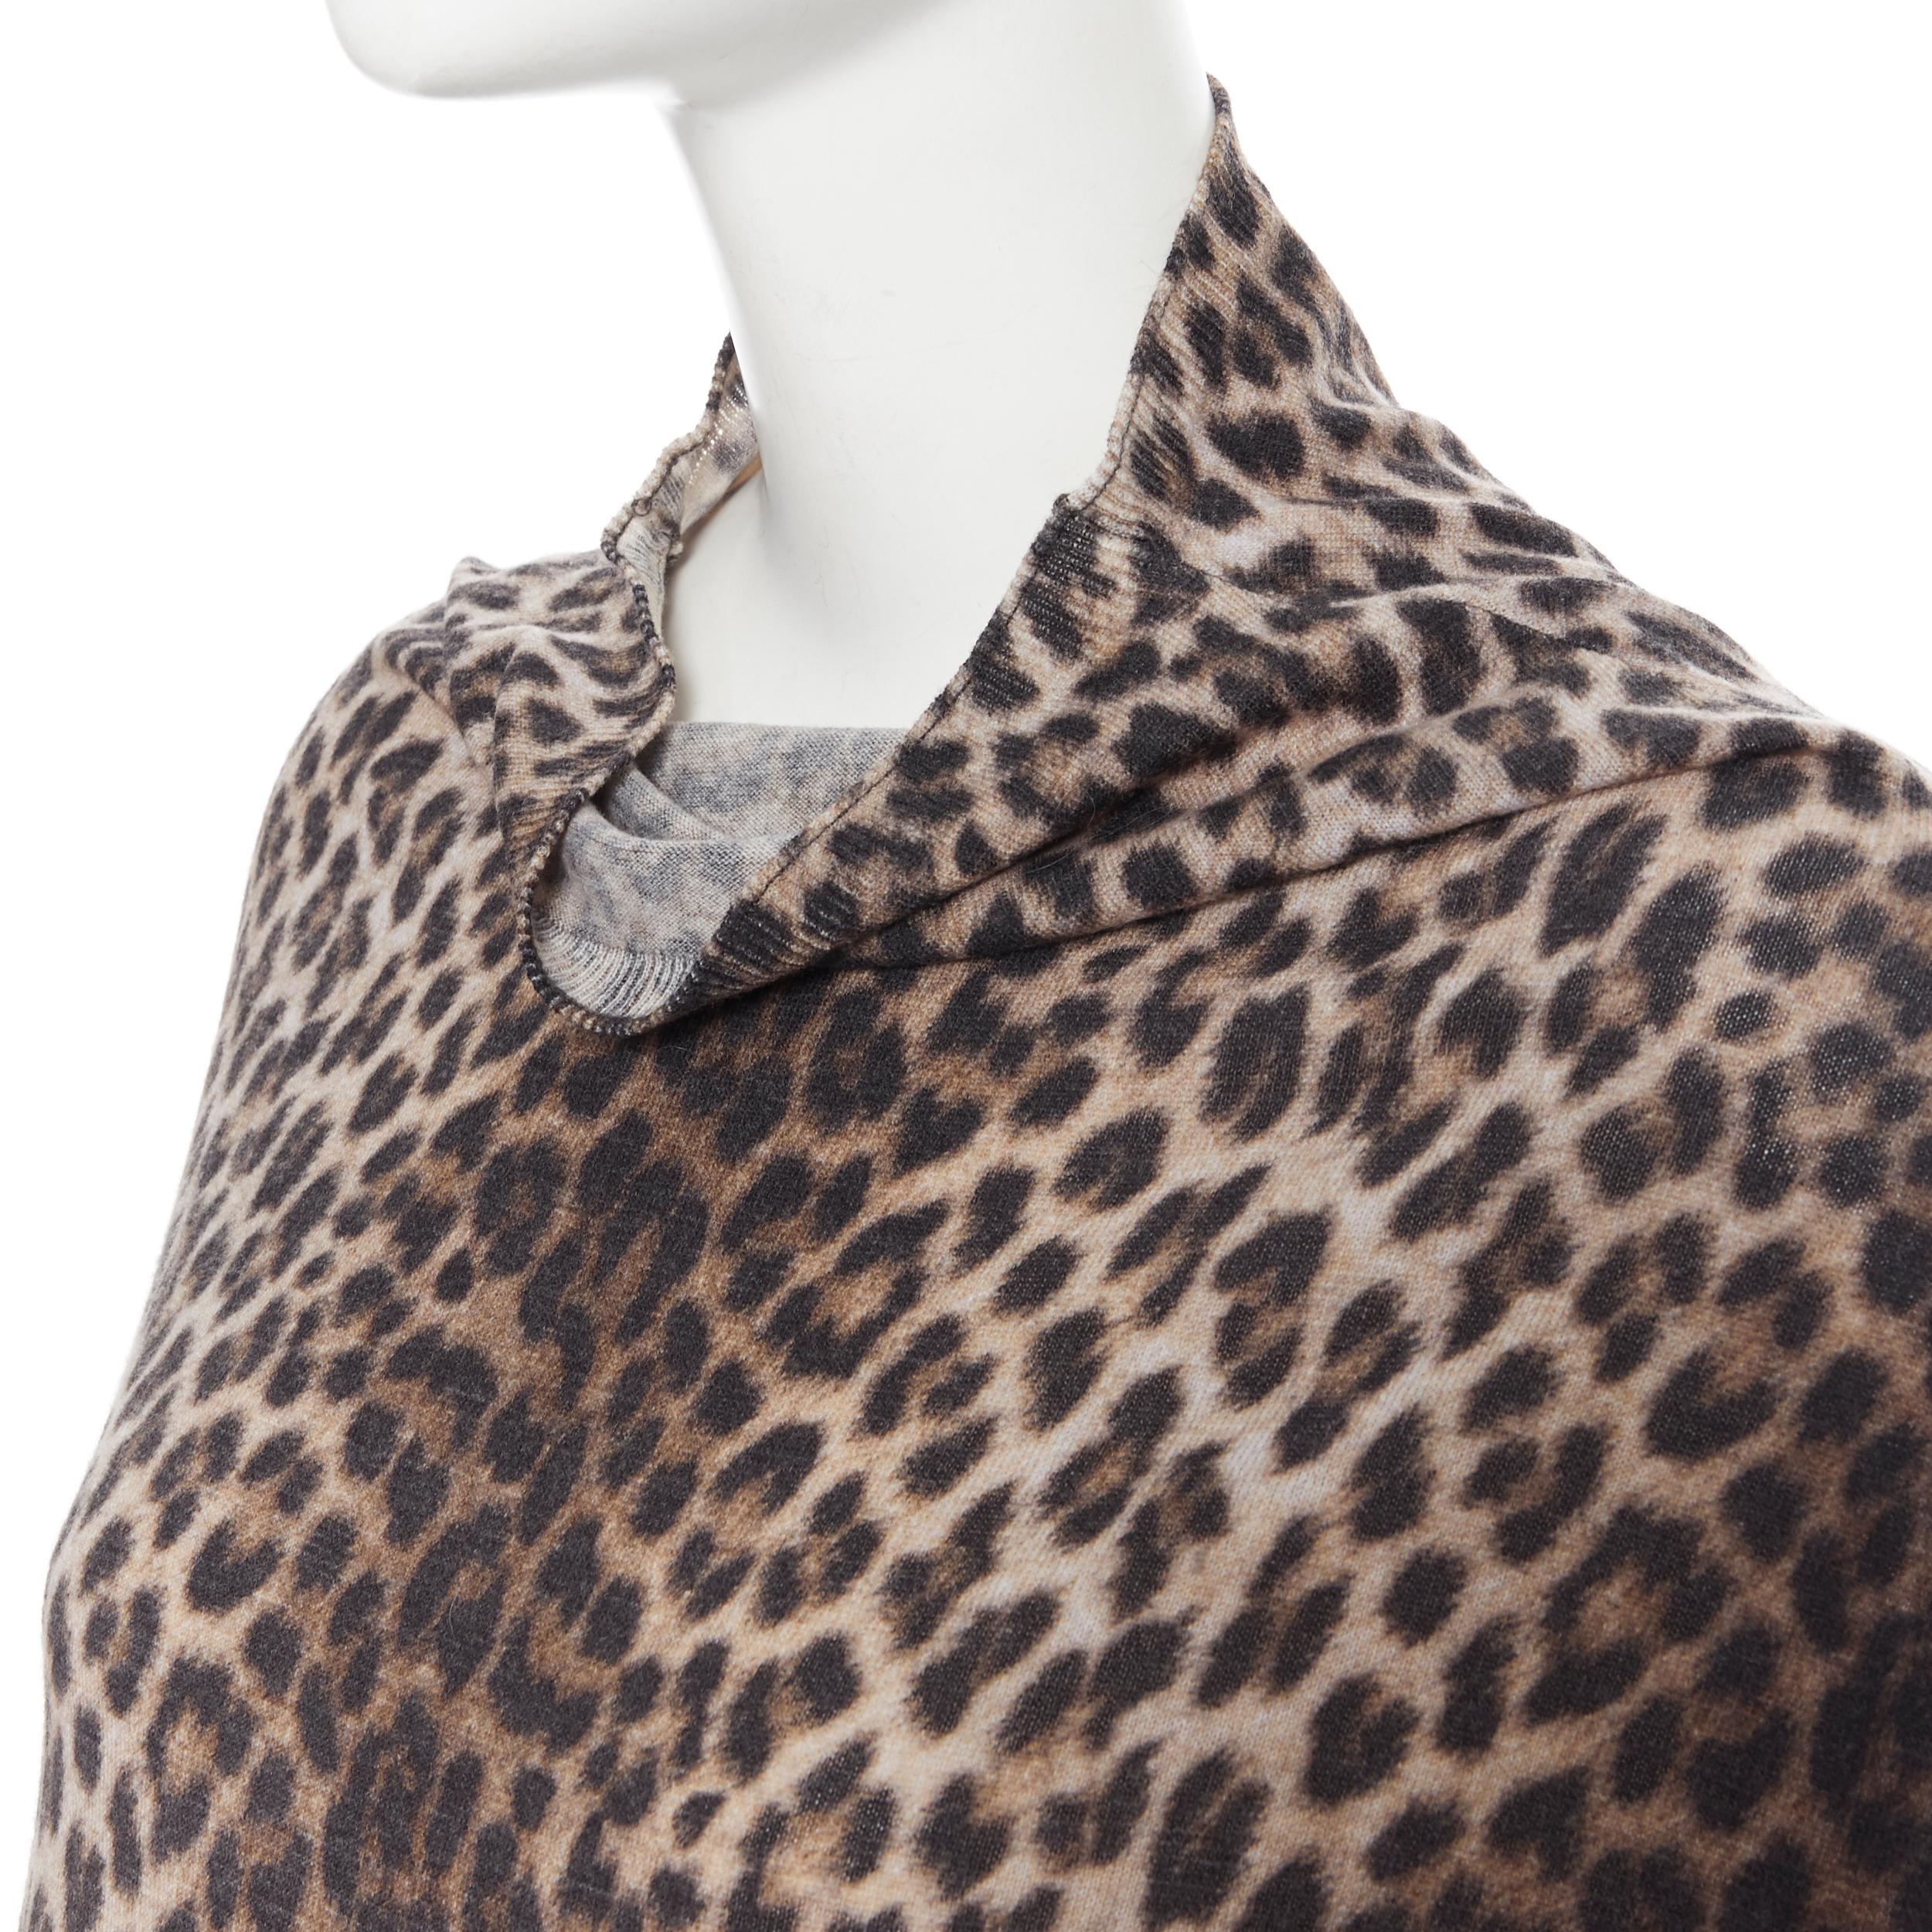 LANVIN Elbaz 2010 100% wool brown leopard spot pullover slit sleeve sweater XS
Brand: Lanvin
Designer: Alber Elbaz
Collection: Fall 2010
Model Name / Style: Wool pullover
Material: Wool
Color: Brown
Pattern: Leopard
Extra Detail: Draped neckline.